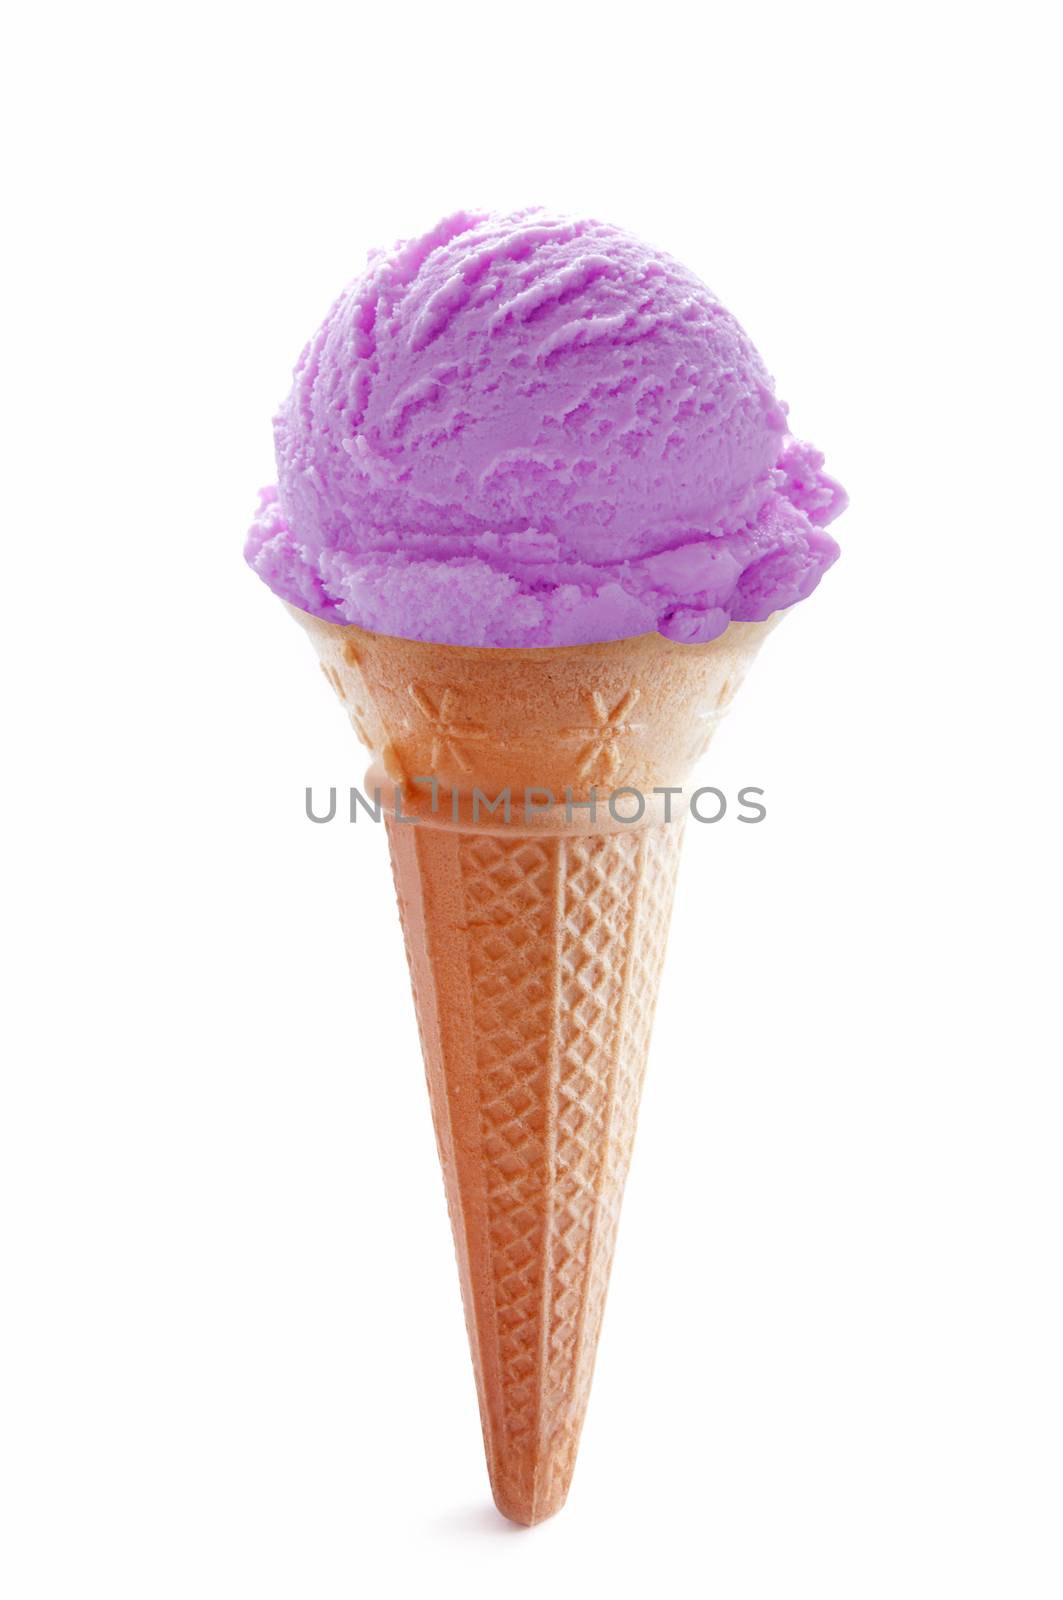 Blueberry ice cream cone by unikpix